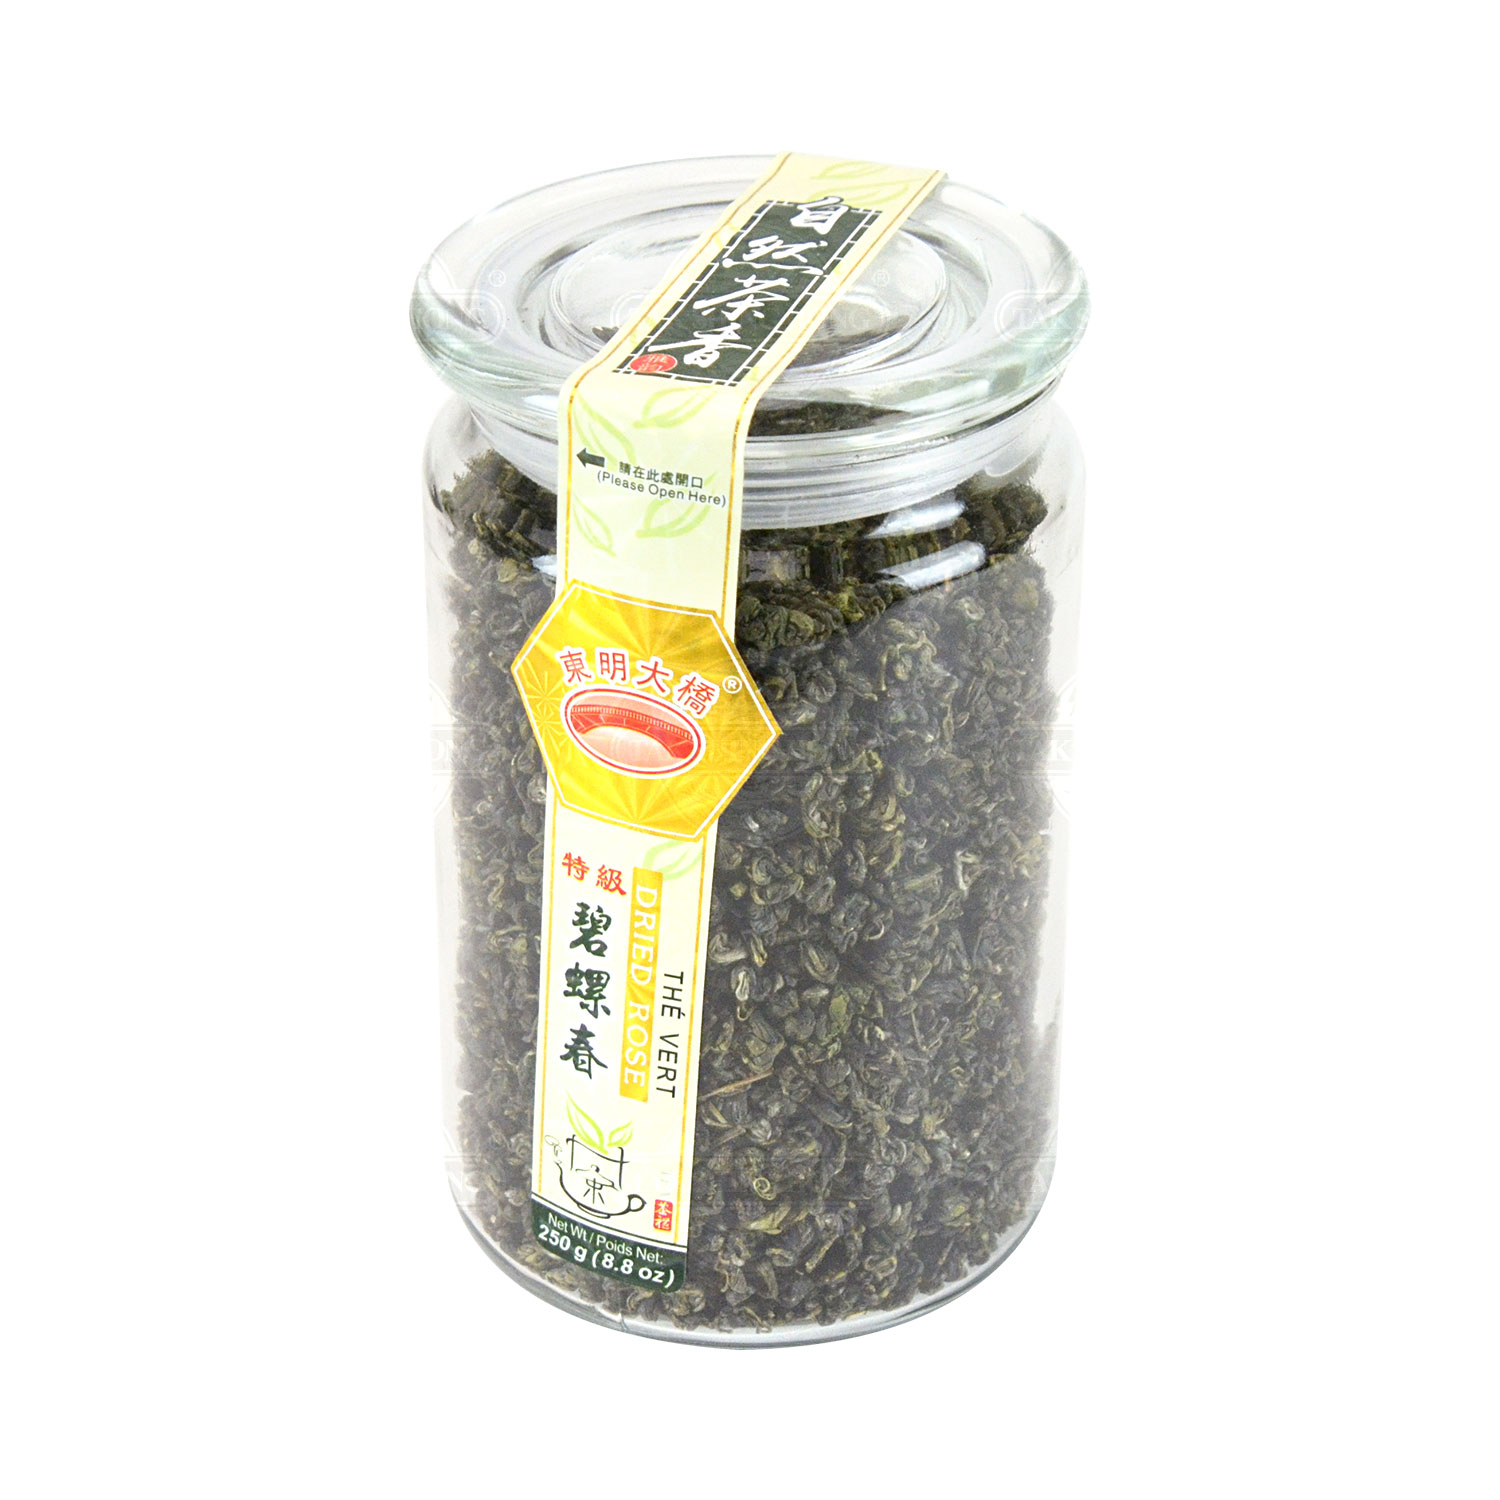 DMDB Dried Rose (Biluochun) Green Tea 250g - Tak Shing Hong